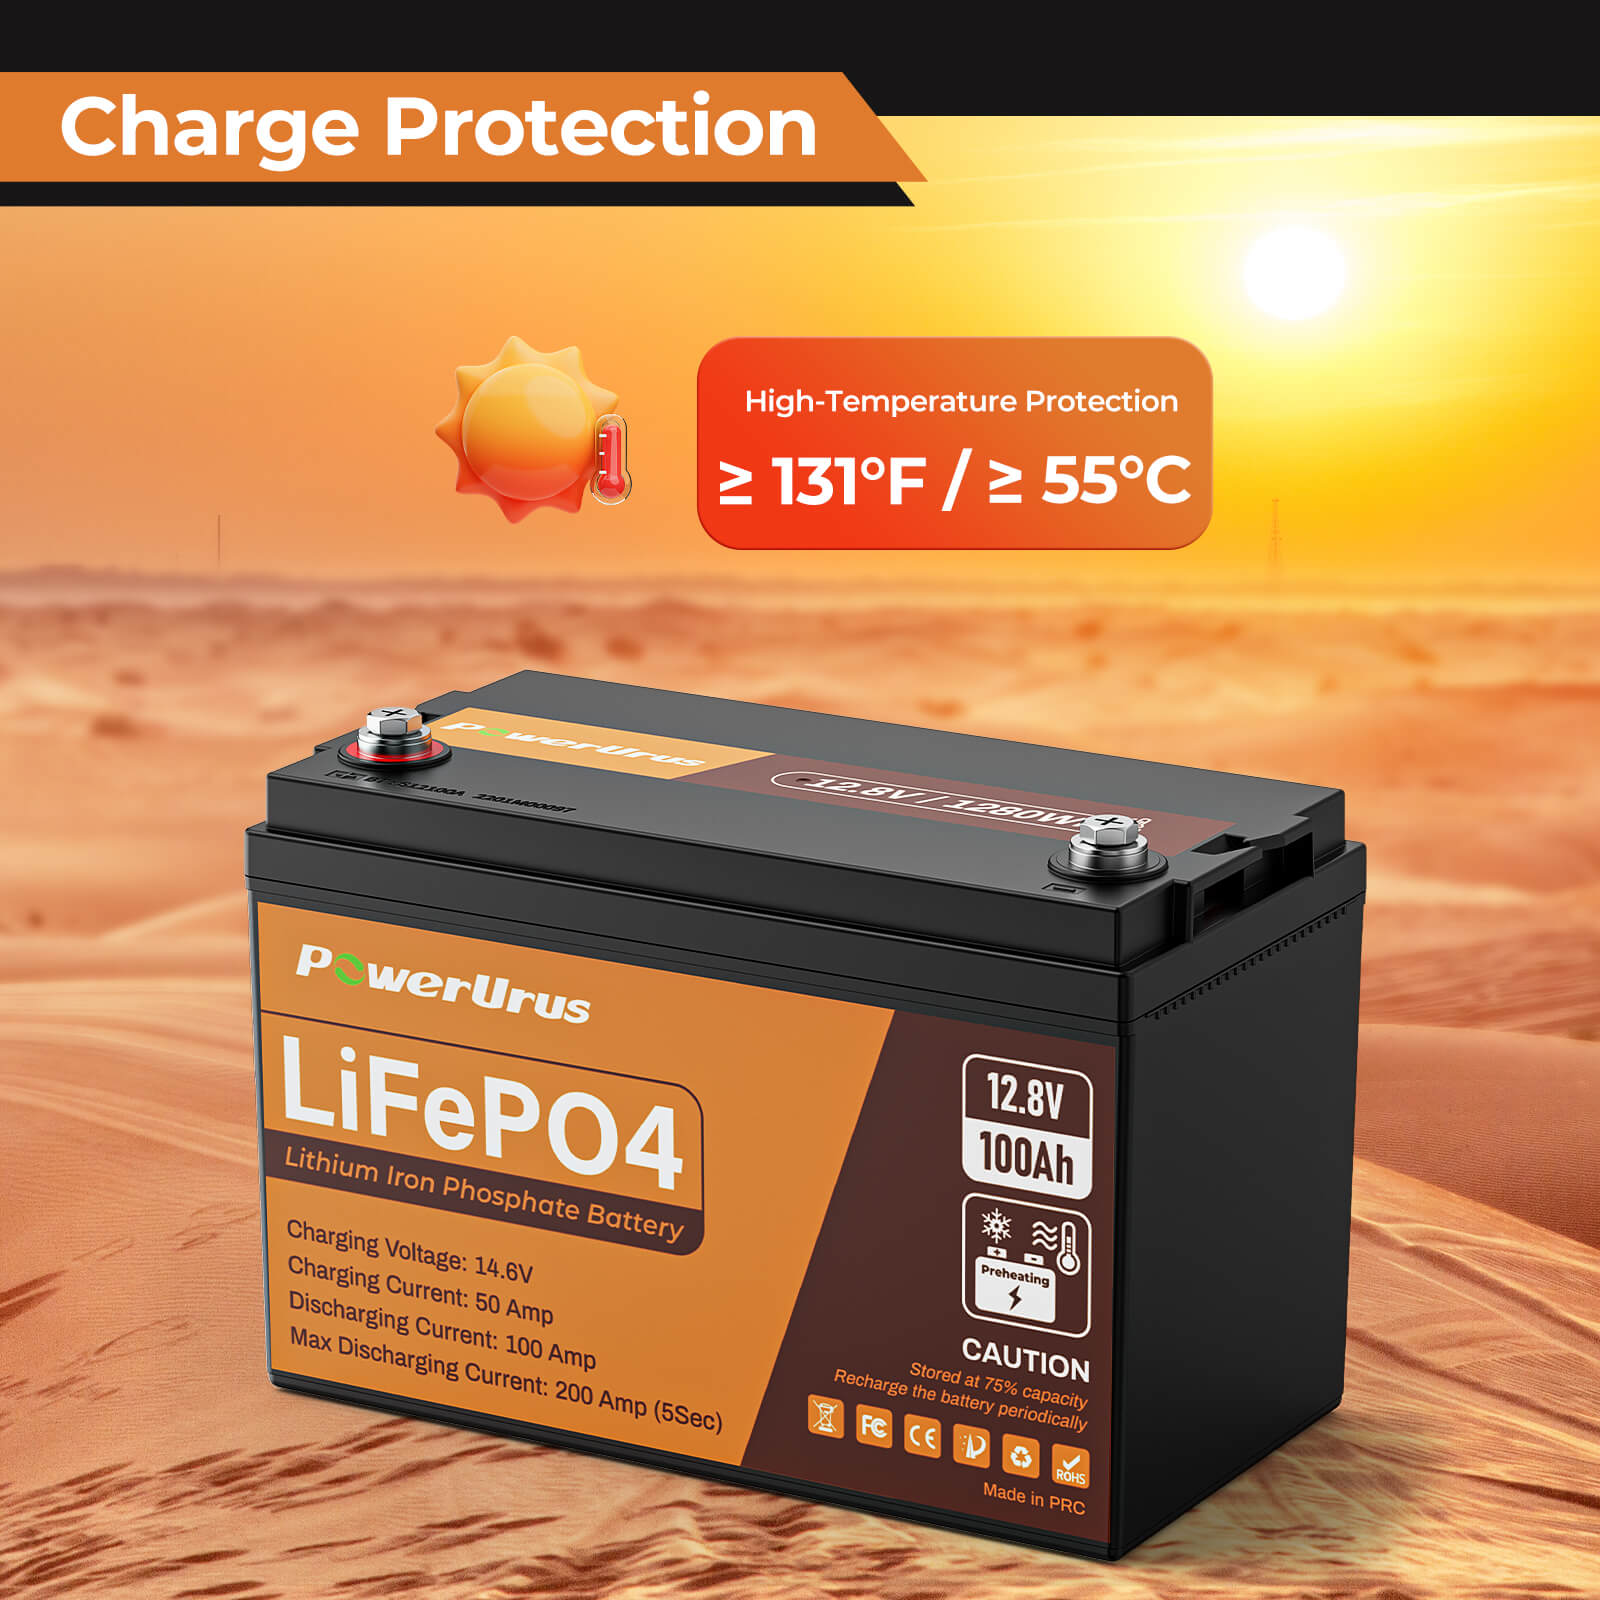 LiFePO4 Smart Self Heating 12V/100Ah  Lithium Iron Phosphate Battery –  Volts energies